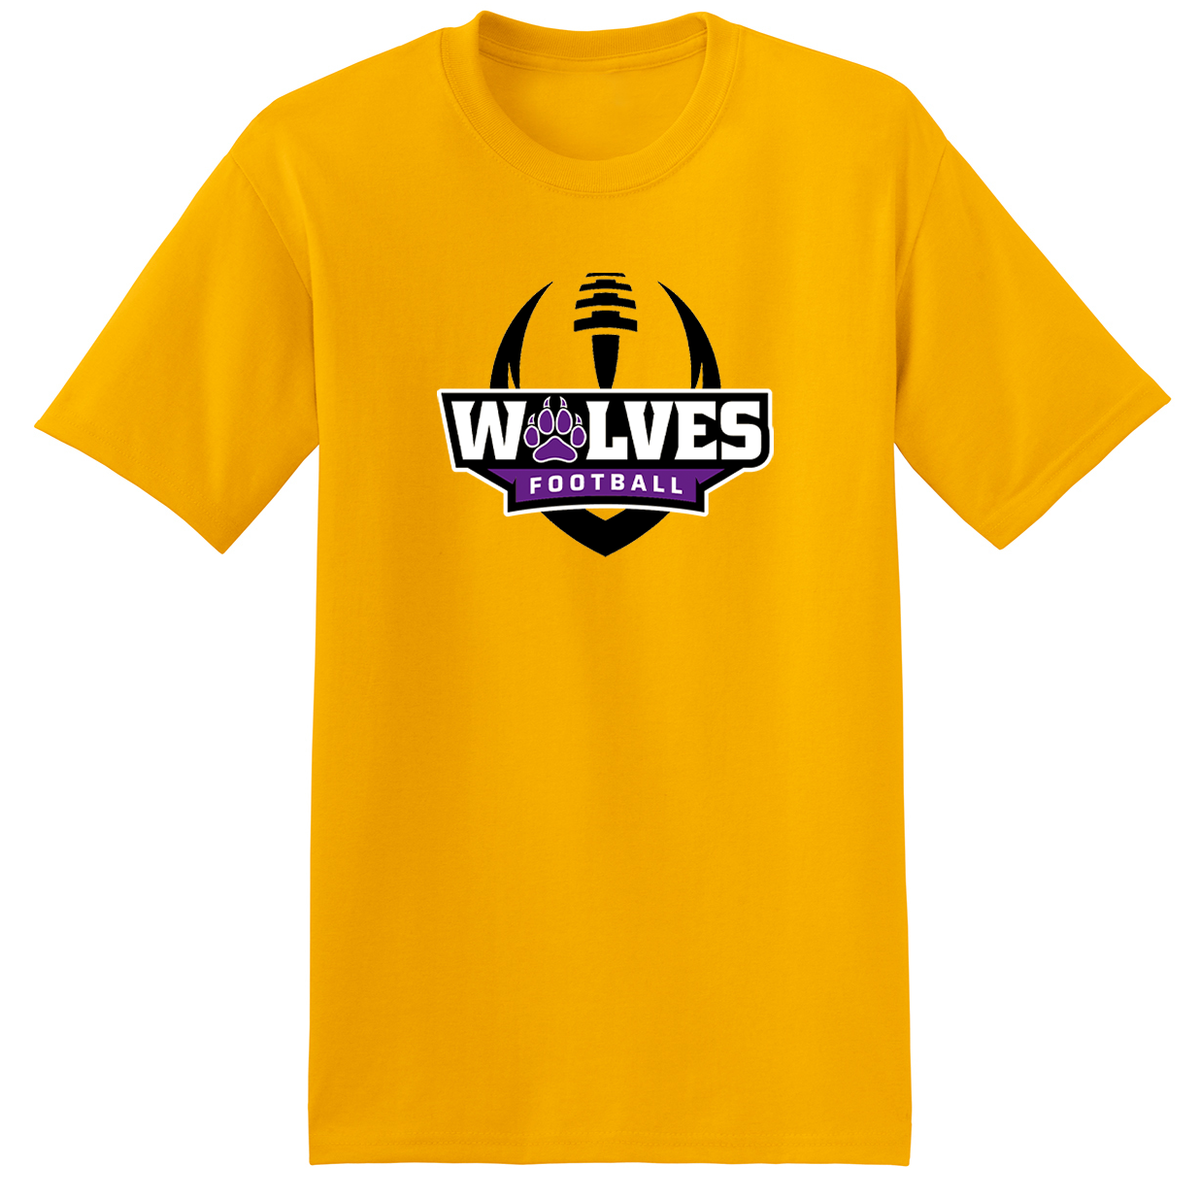 John Jay Wolves Football T-Shirt